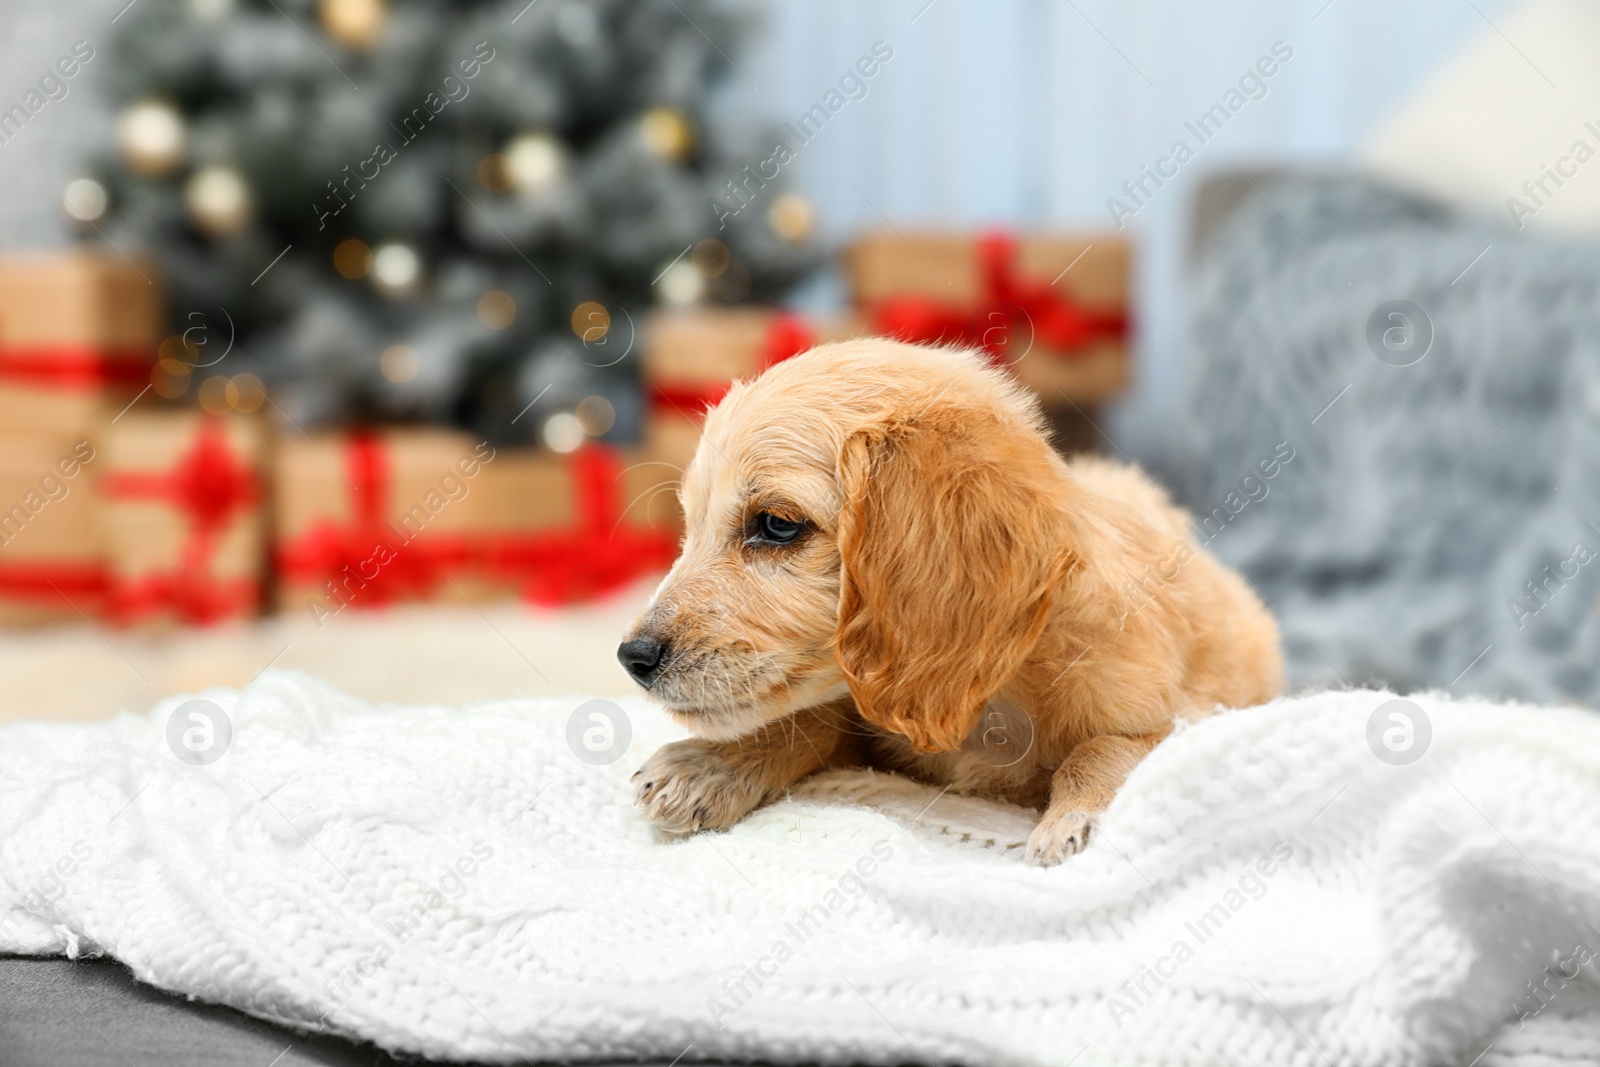 Photo of Adorable English Cocker Spaniel puppy on warm blanket indoors. Winter season